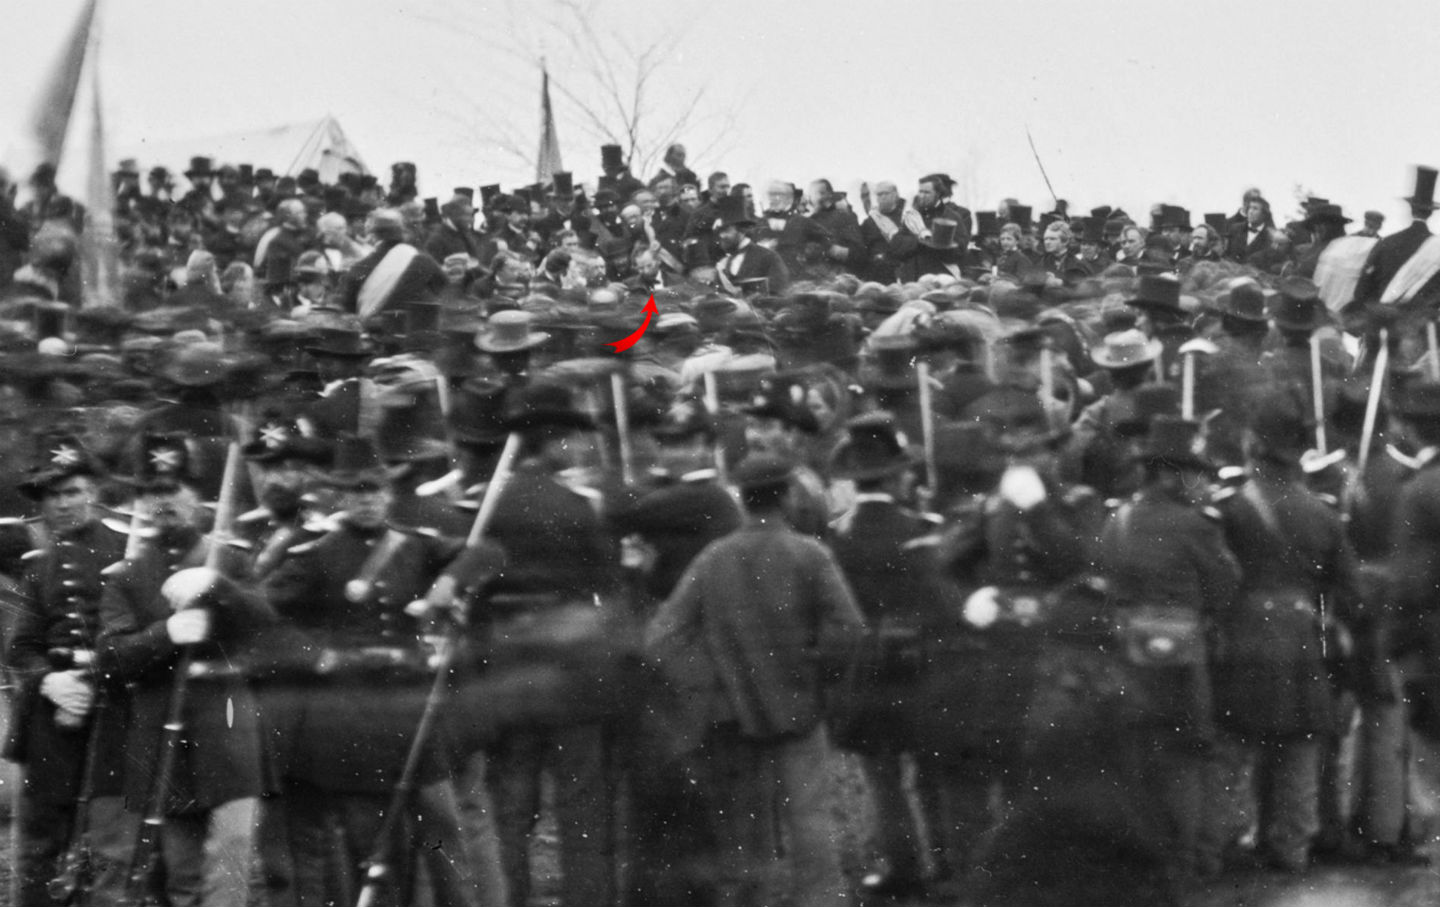 November 19, 1863: Abraham Lincoln Delivers the Gettysburg Address